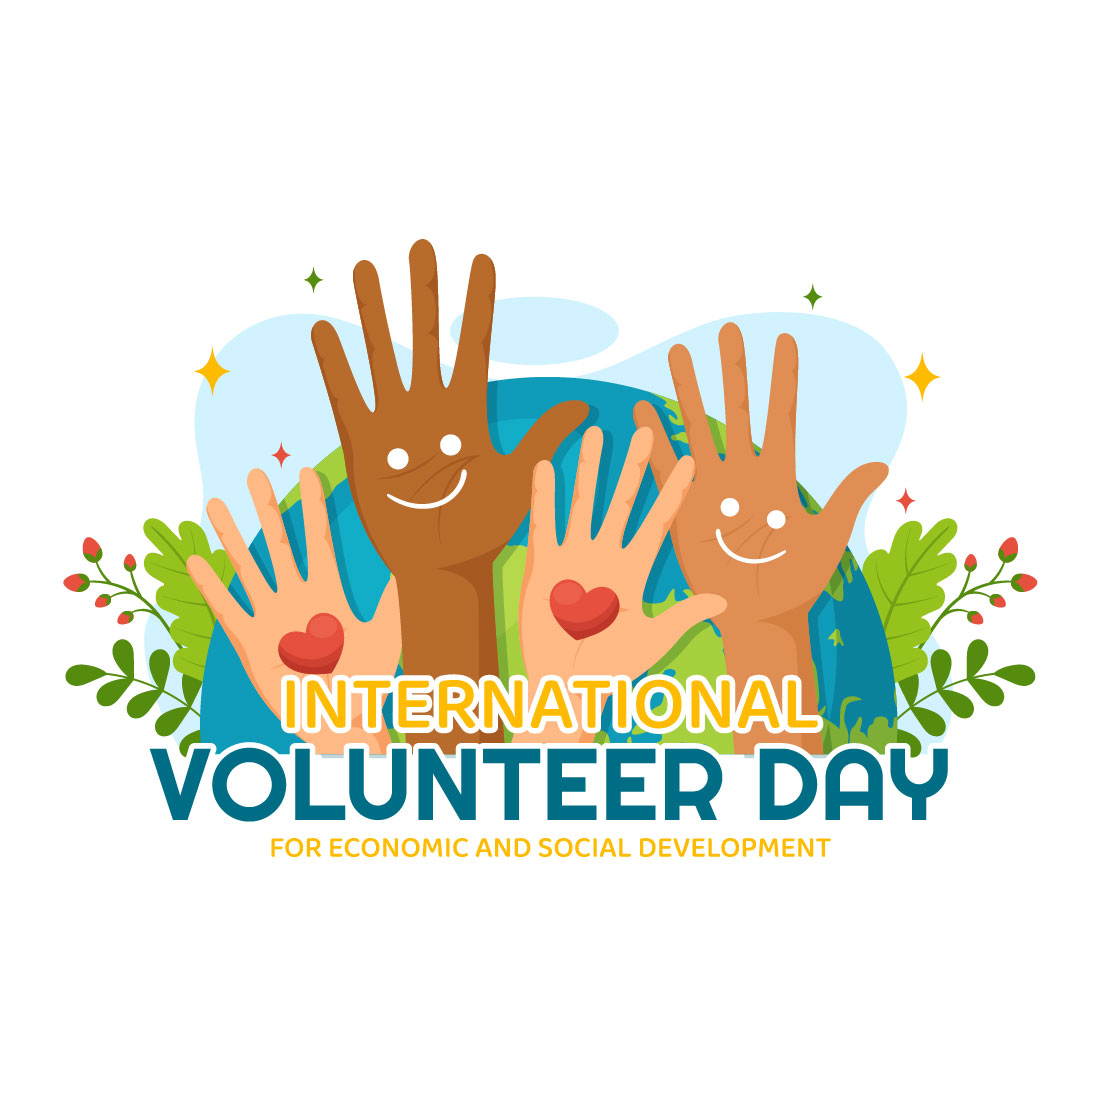 12 International Volunteer Day Illustration cover image.